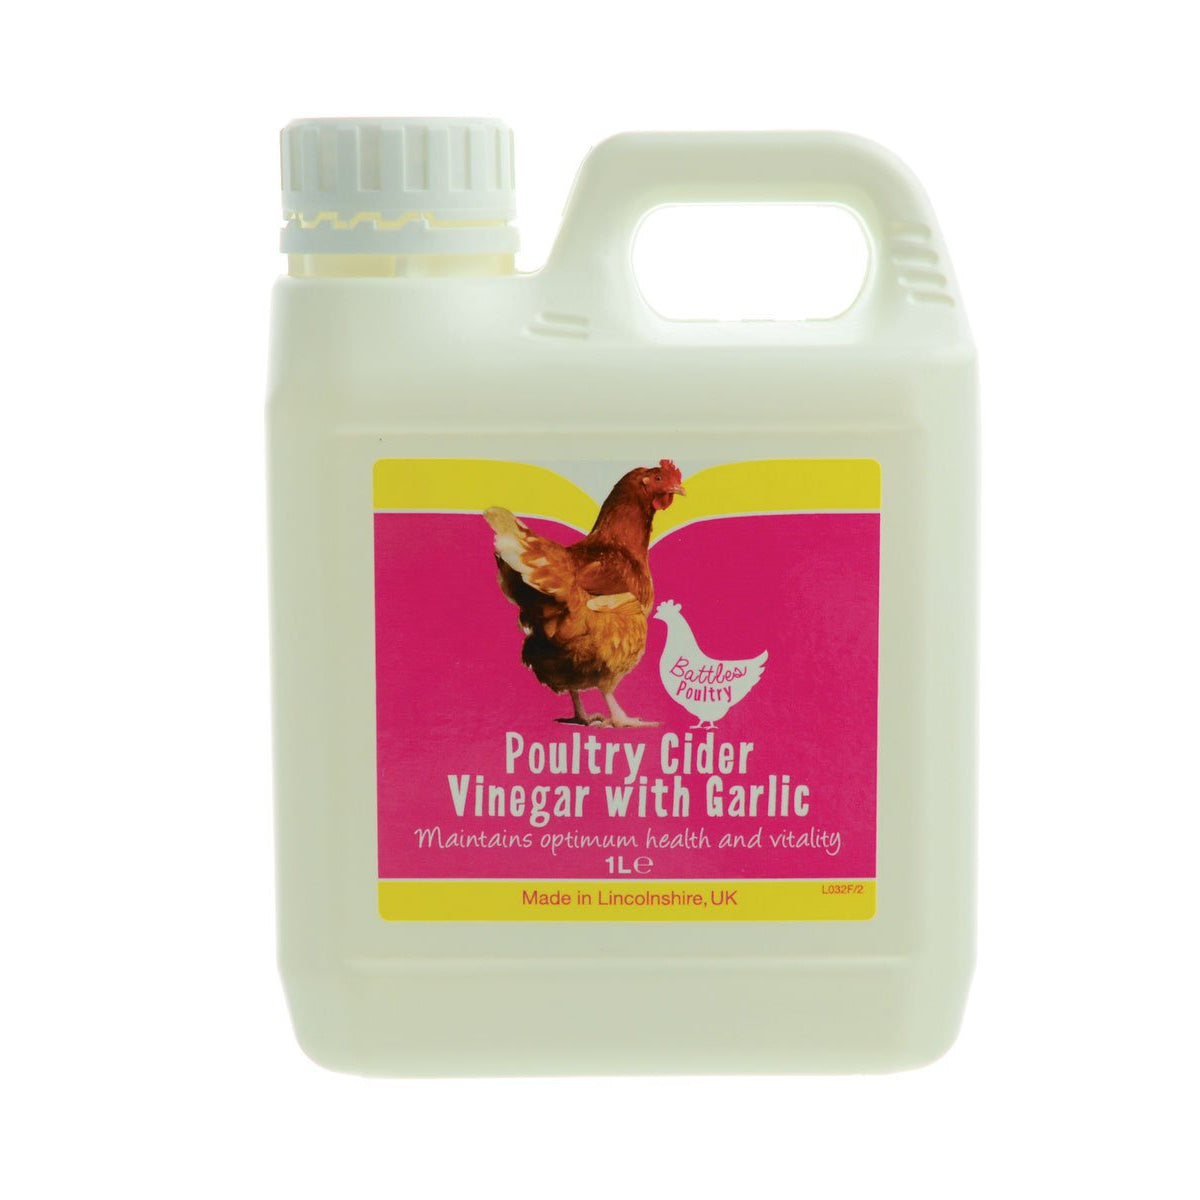 Battles Poultry Cider Vinegar with Garlic #size_1L